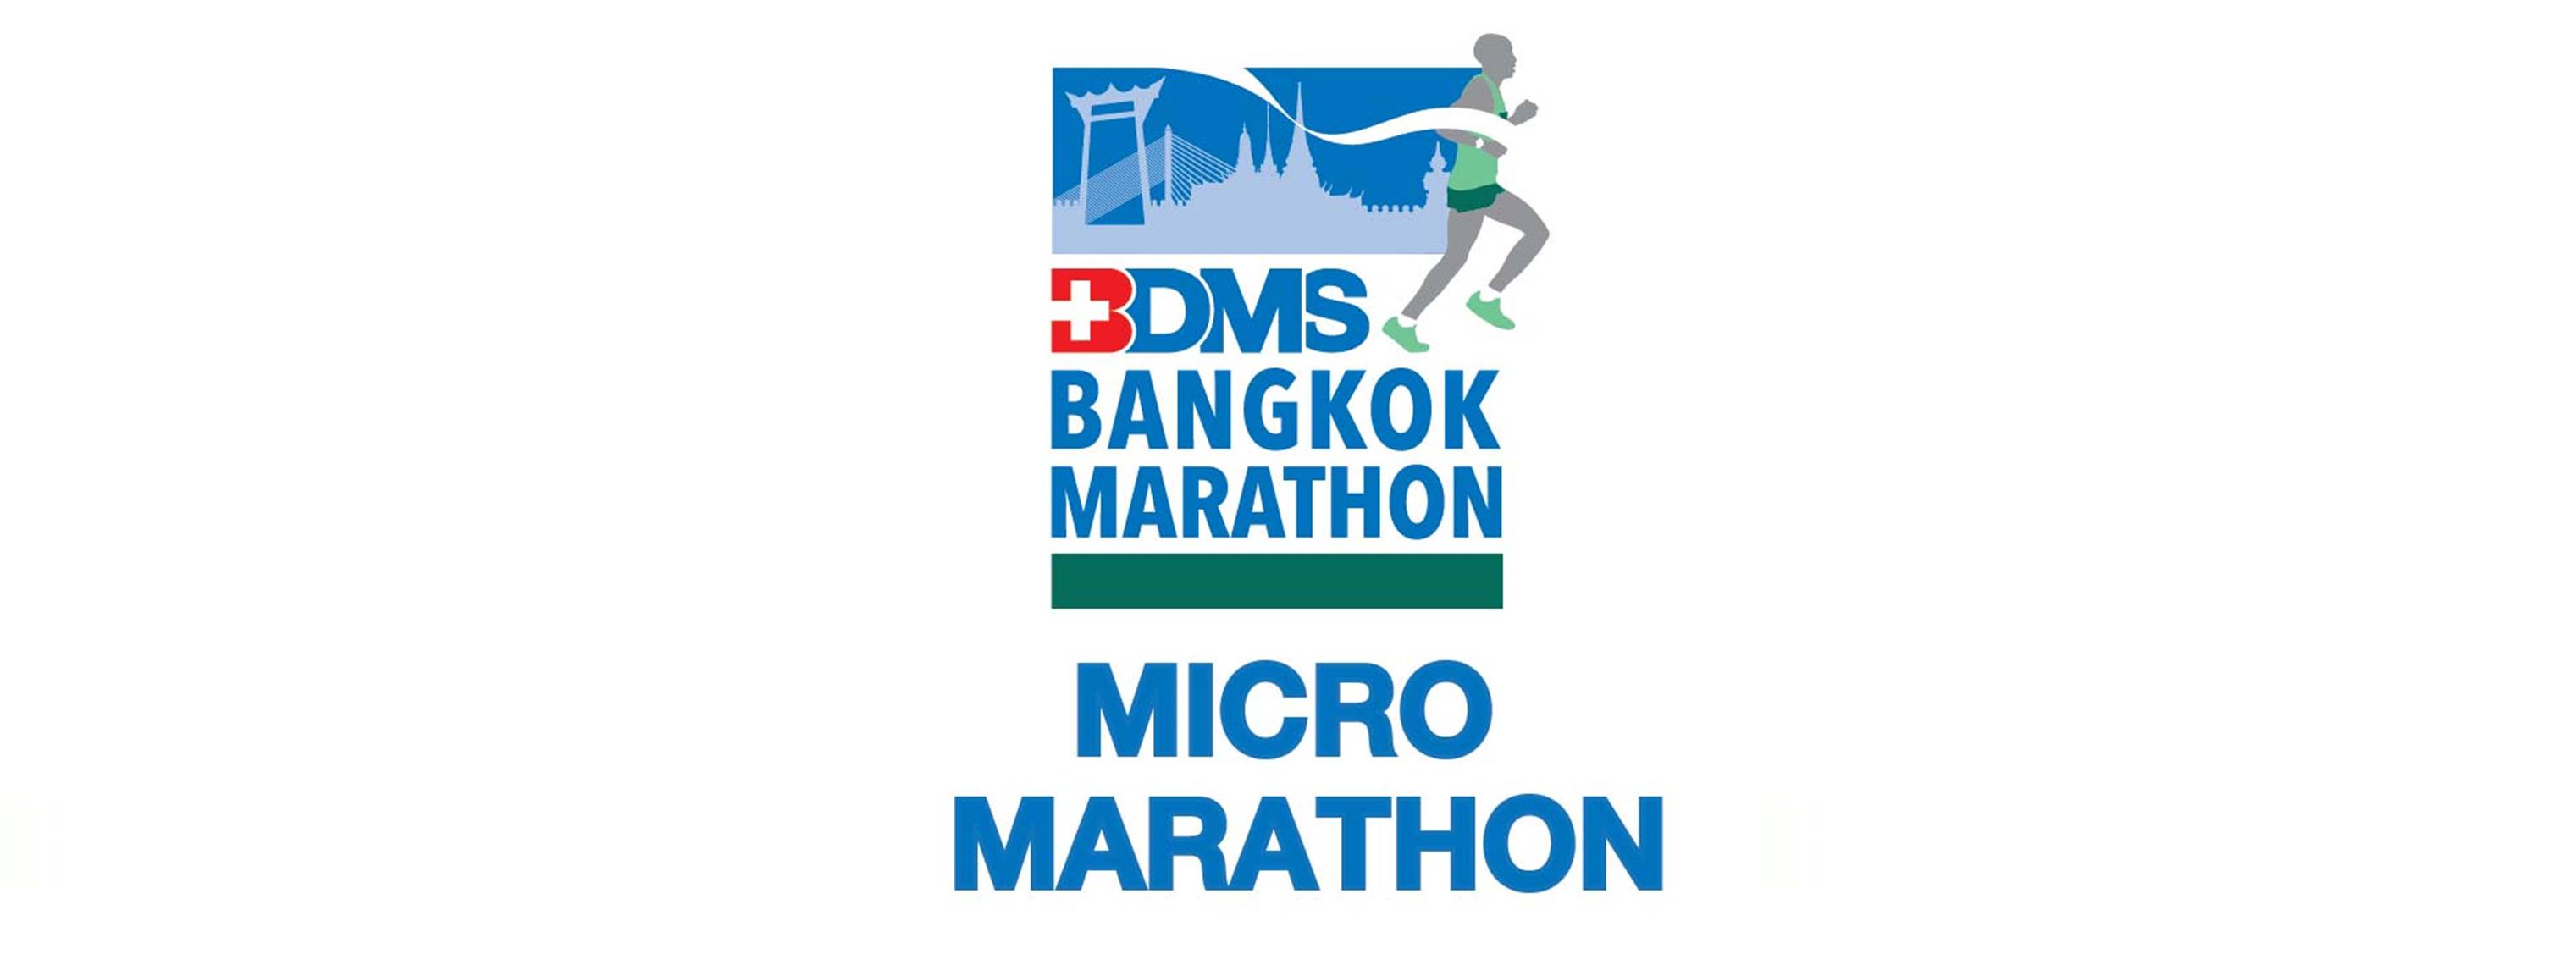 Bangkok Marathon 2017 - Micro Marathon